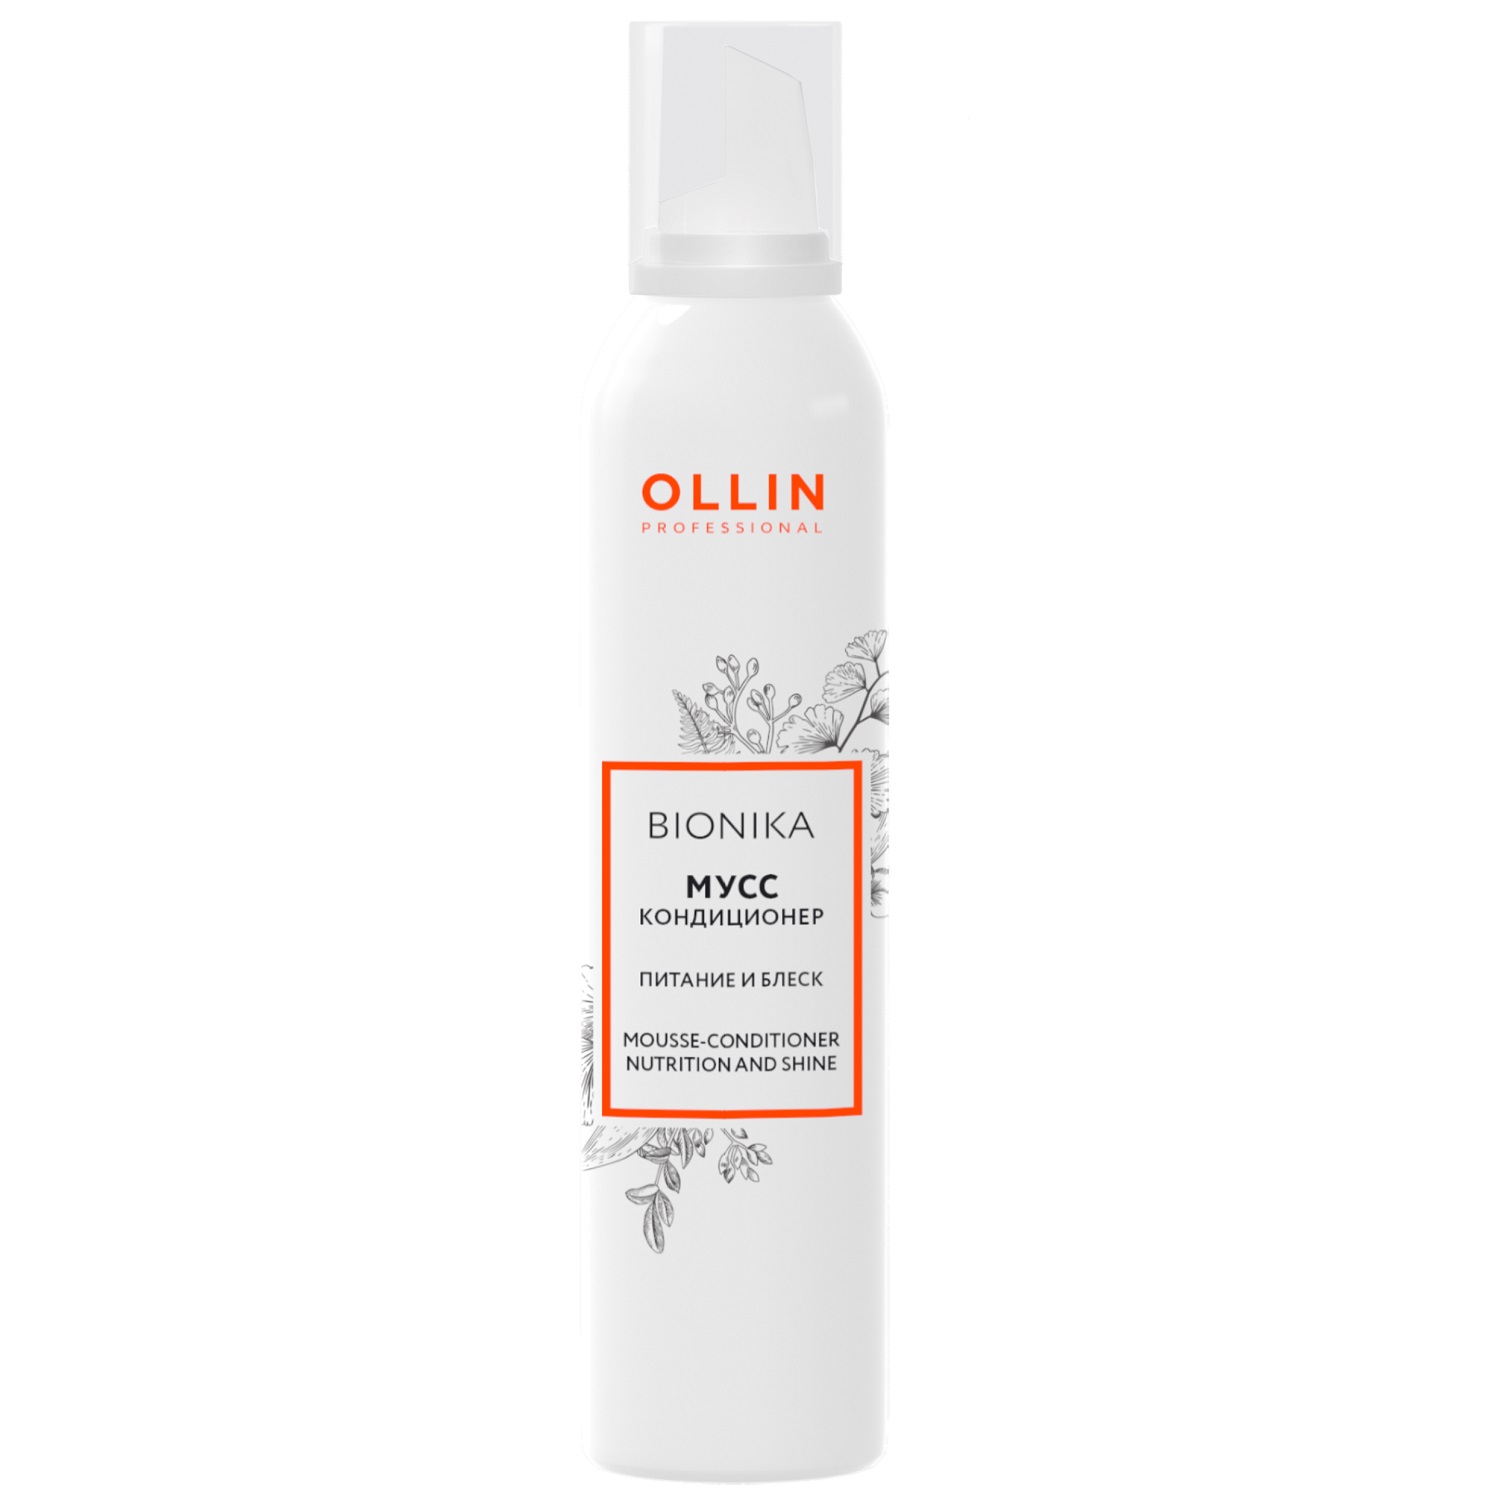 Ollin Professional Мусс-кондиционер для волос «Питание и блеск», 250 мл (Ollin Professional, BioNika)